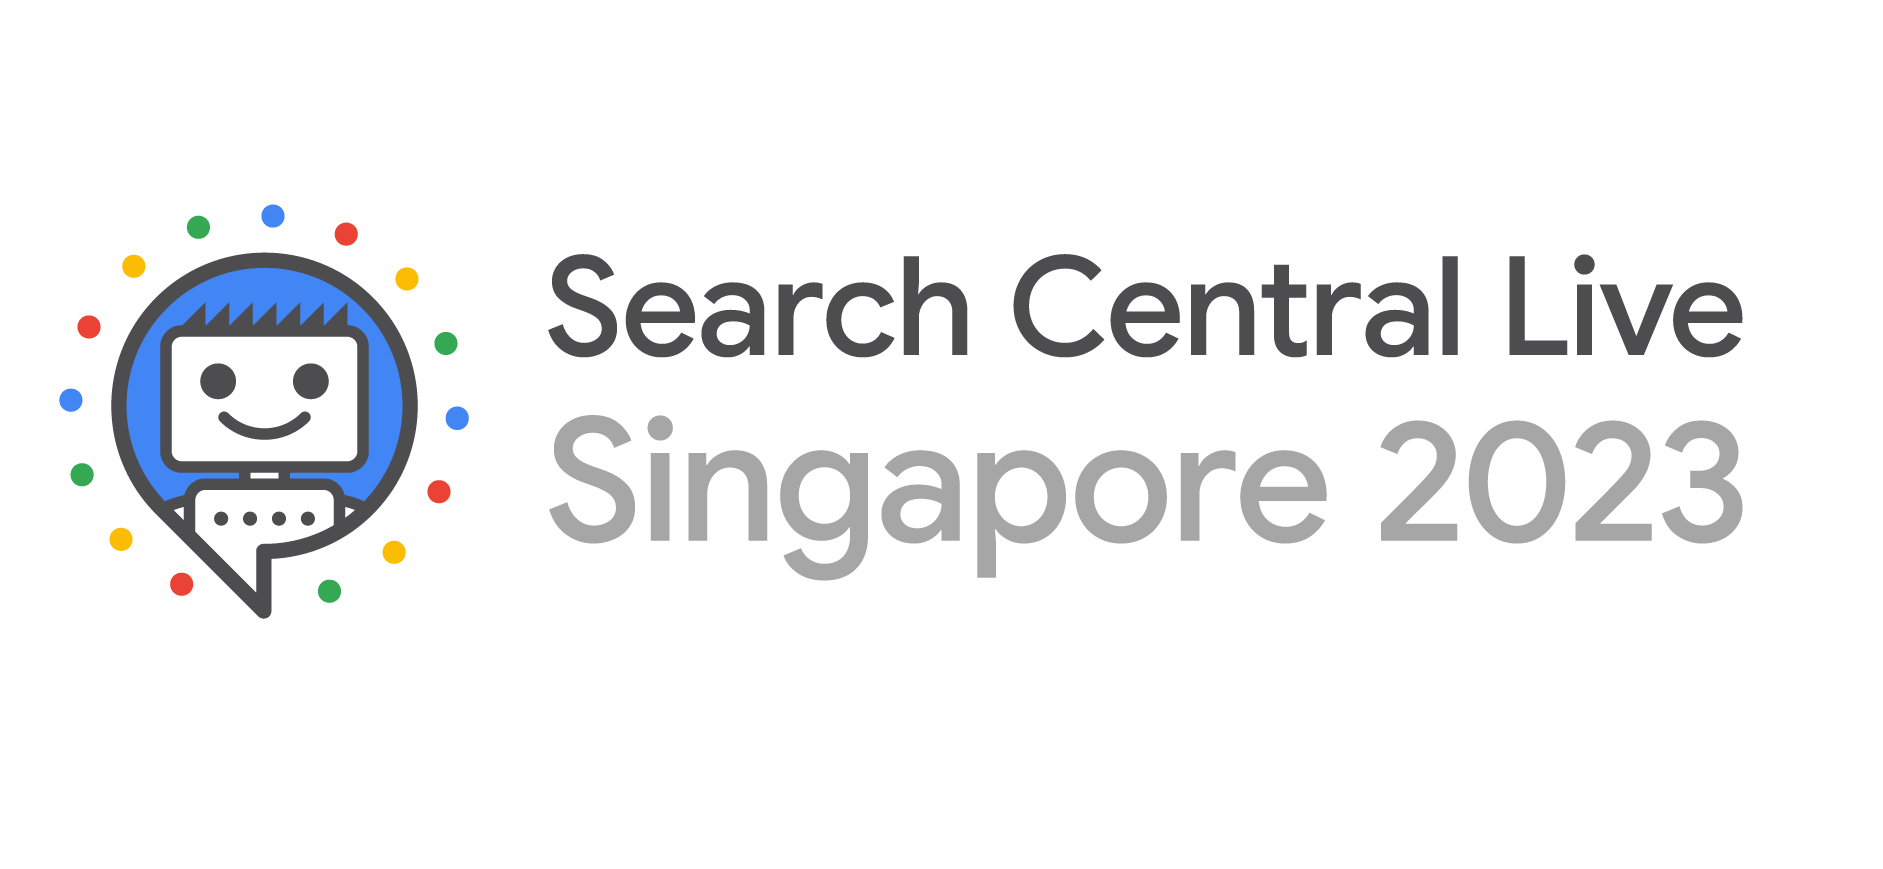 Search Central Live Singapore 2023 logo